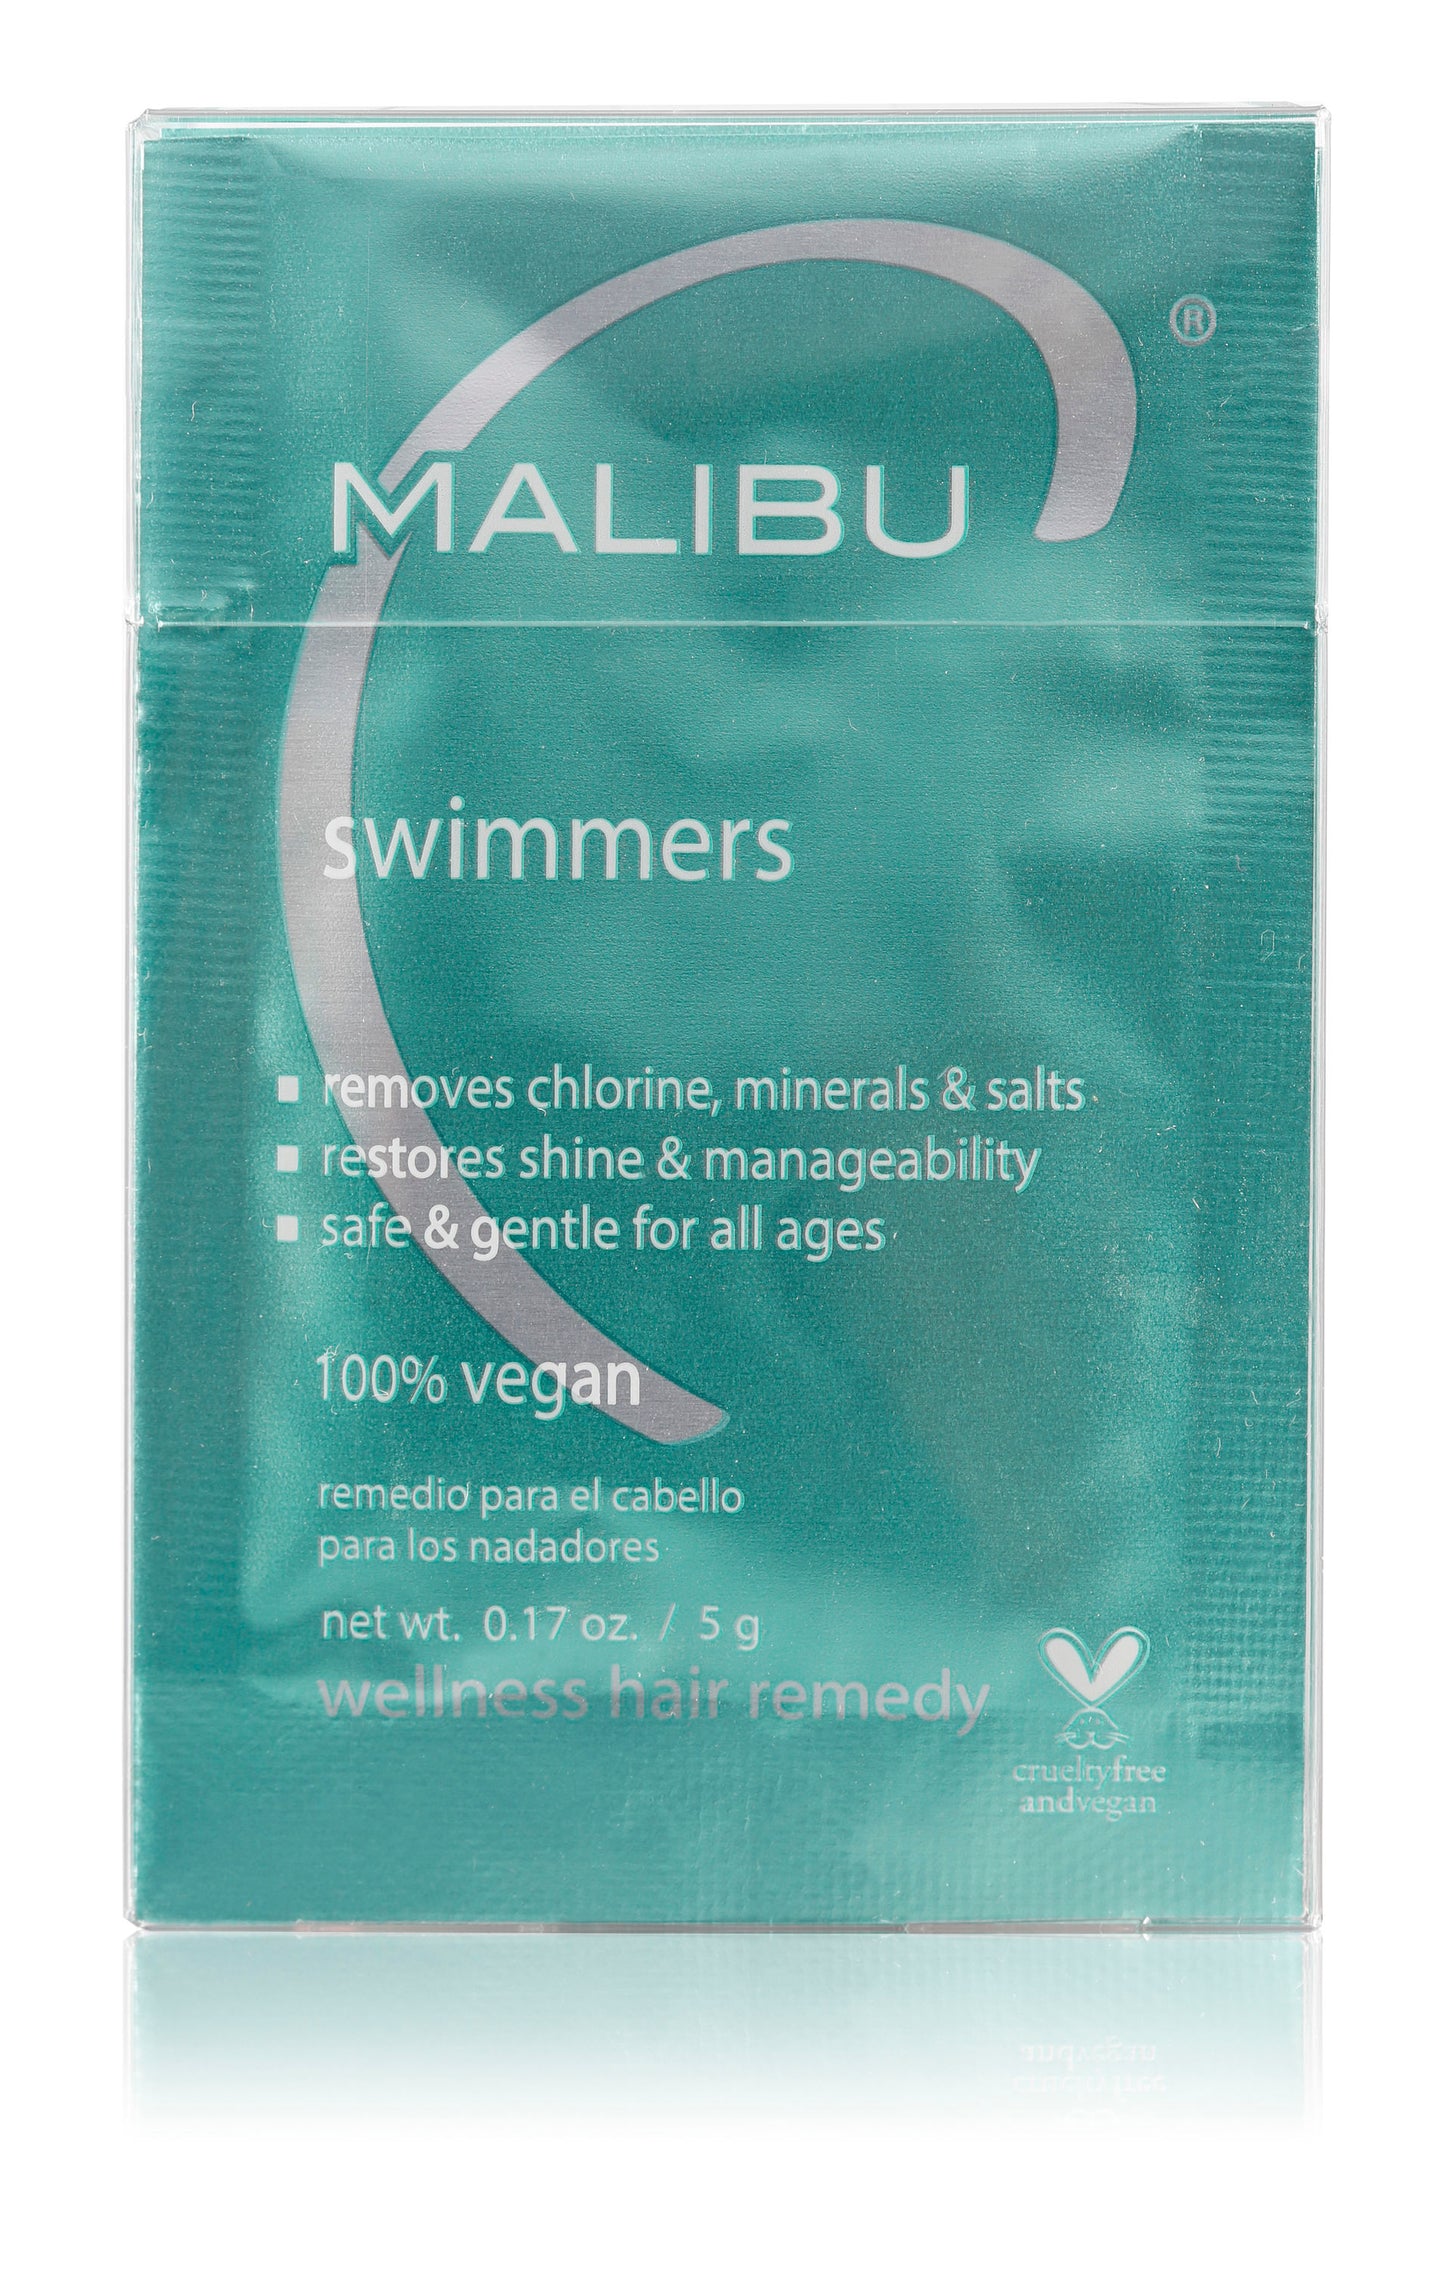 Malibu C Swimmers Wellness Remedy For Swimmers